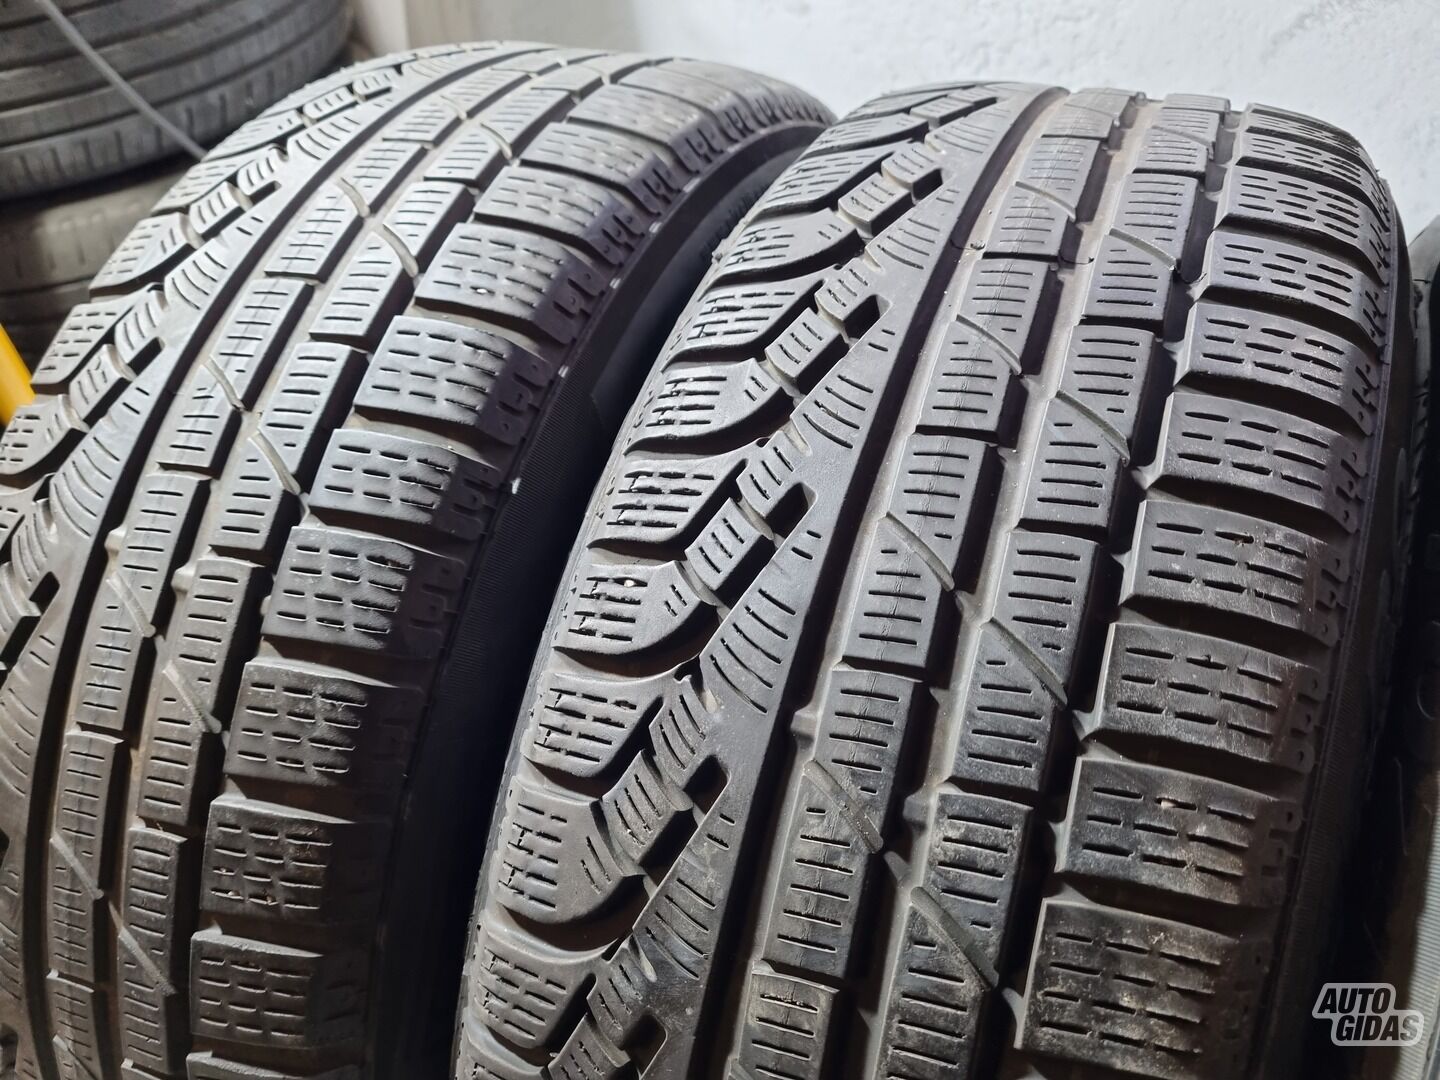 Pirelli 4mm, 2018m R17 universal tyres passanger car